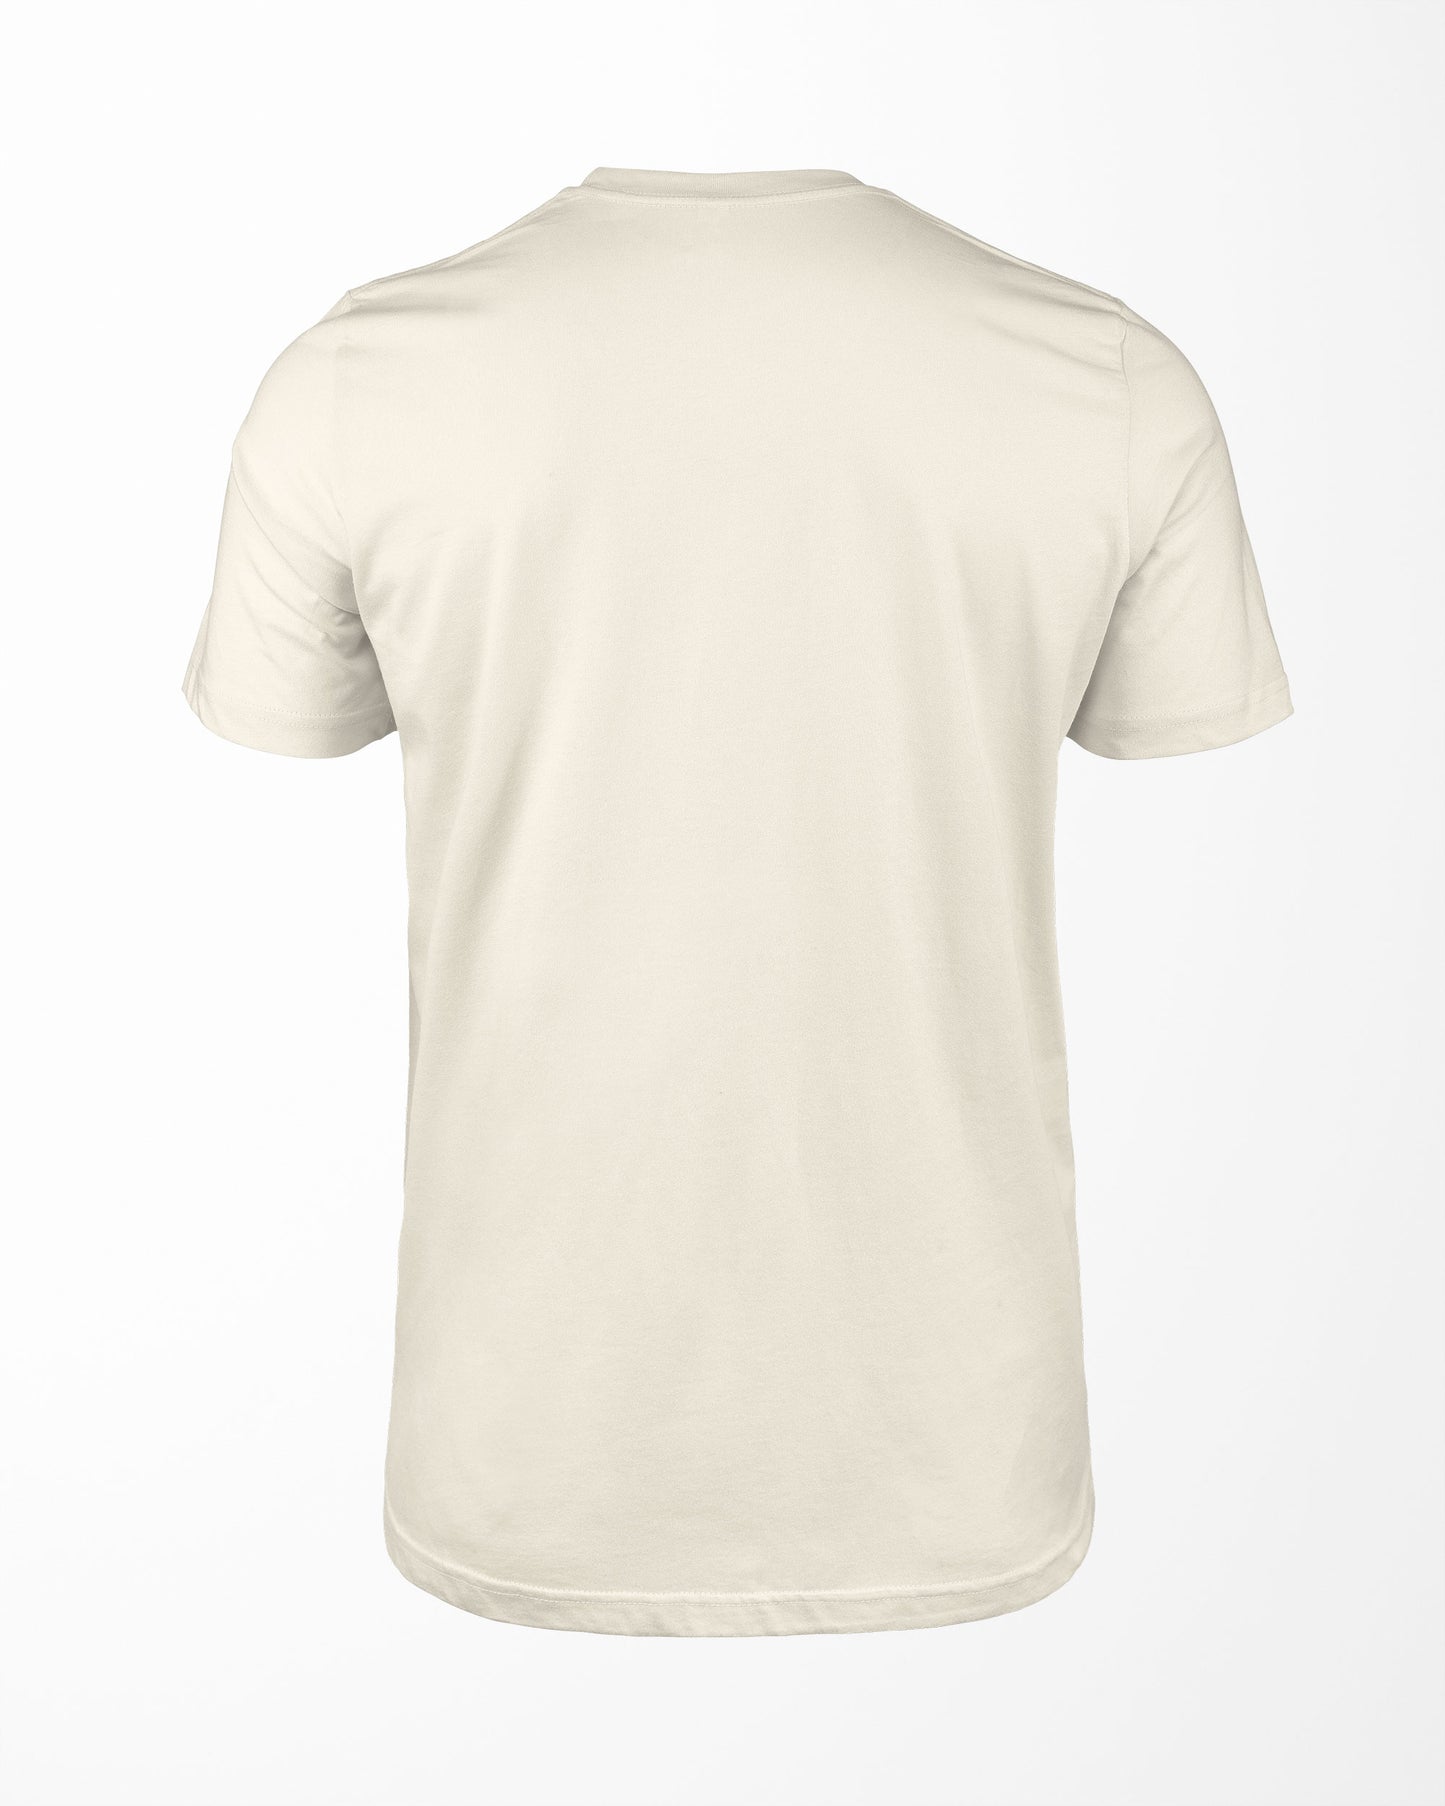 Camiseta Mclaren Special Livery 2021